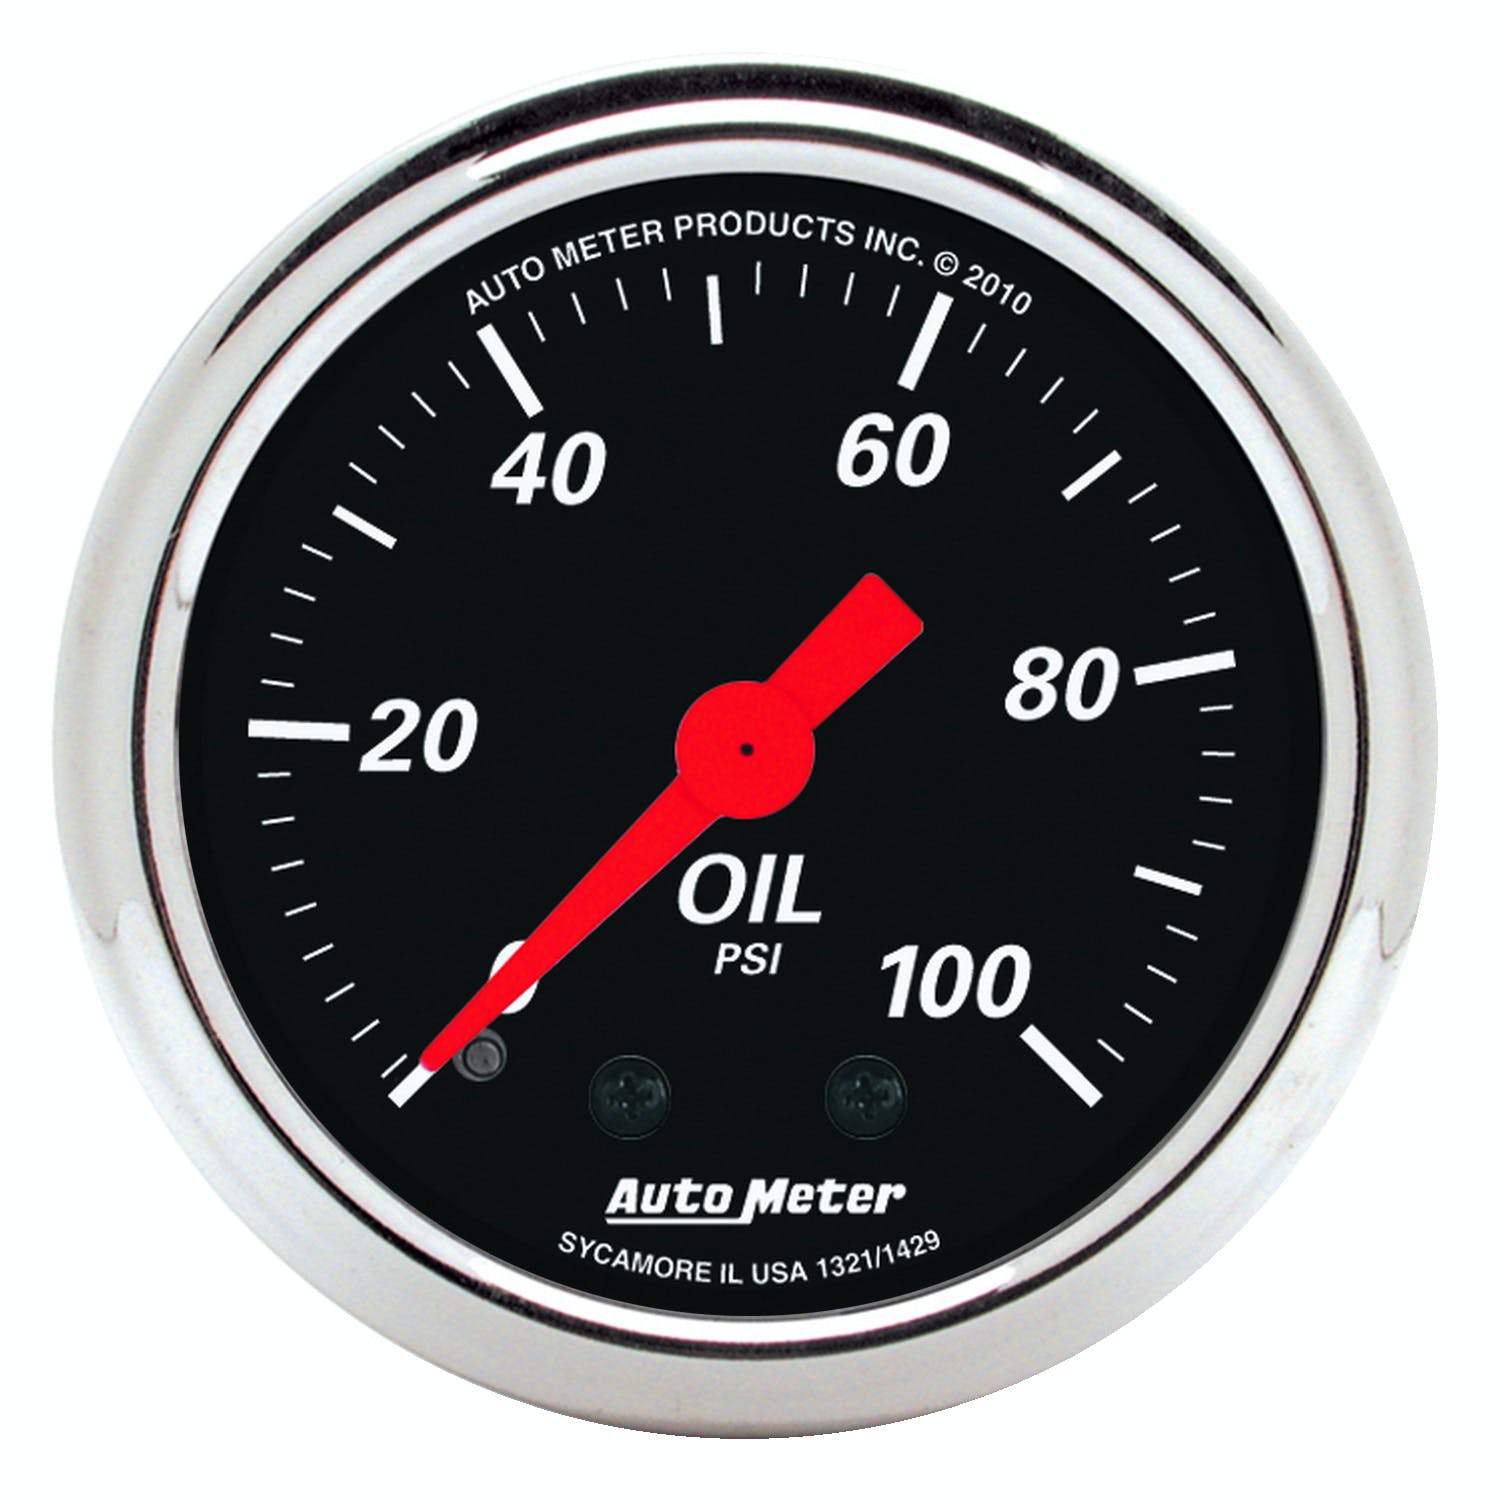 AutoMeter Products 1429 2 Oil Pressure Guage, 0-100 PSI, Mechanical, Designer Black